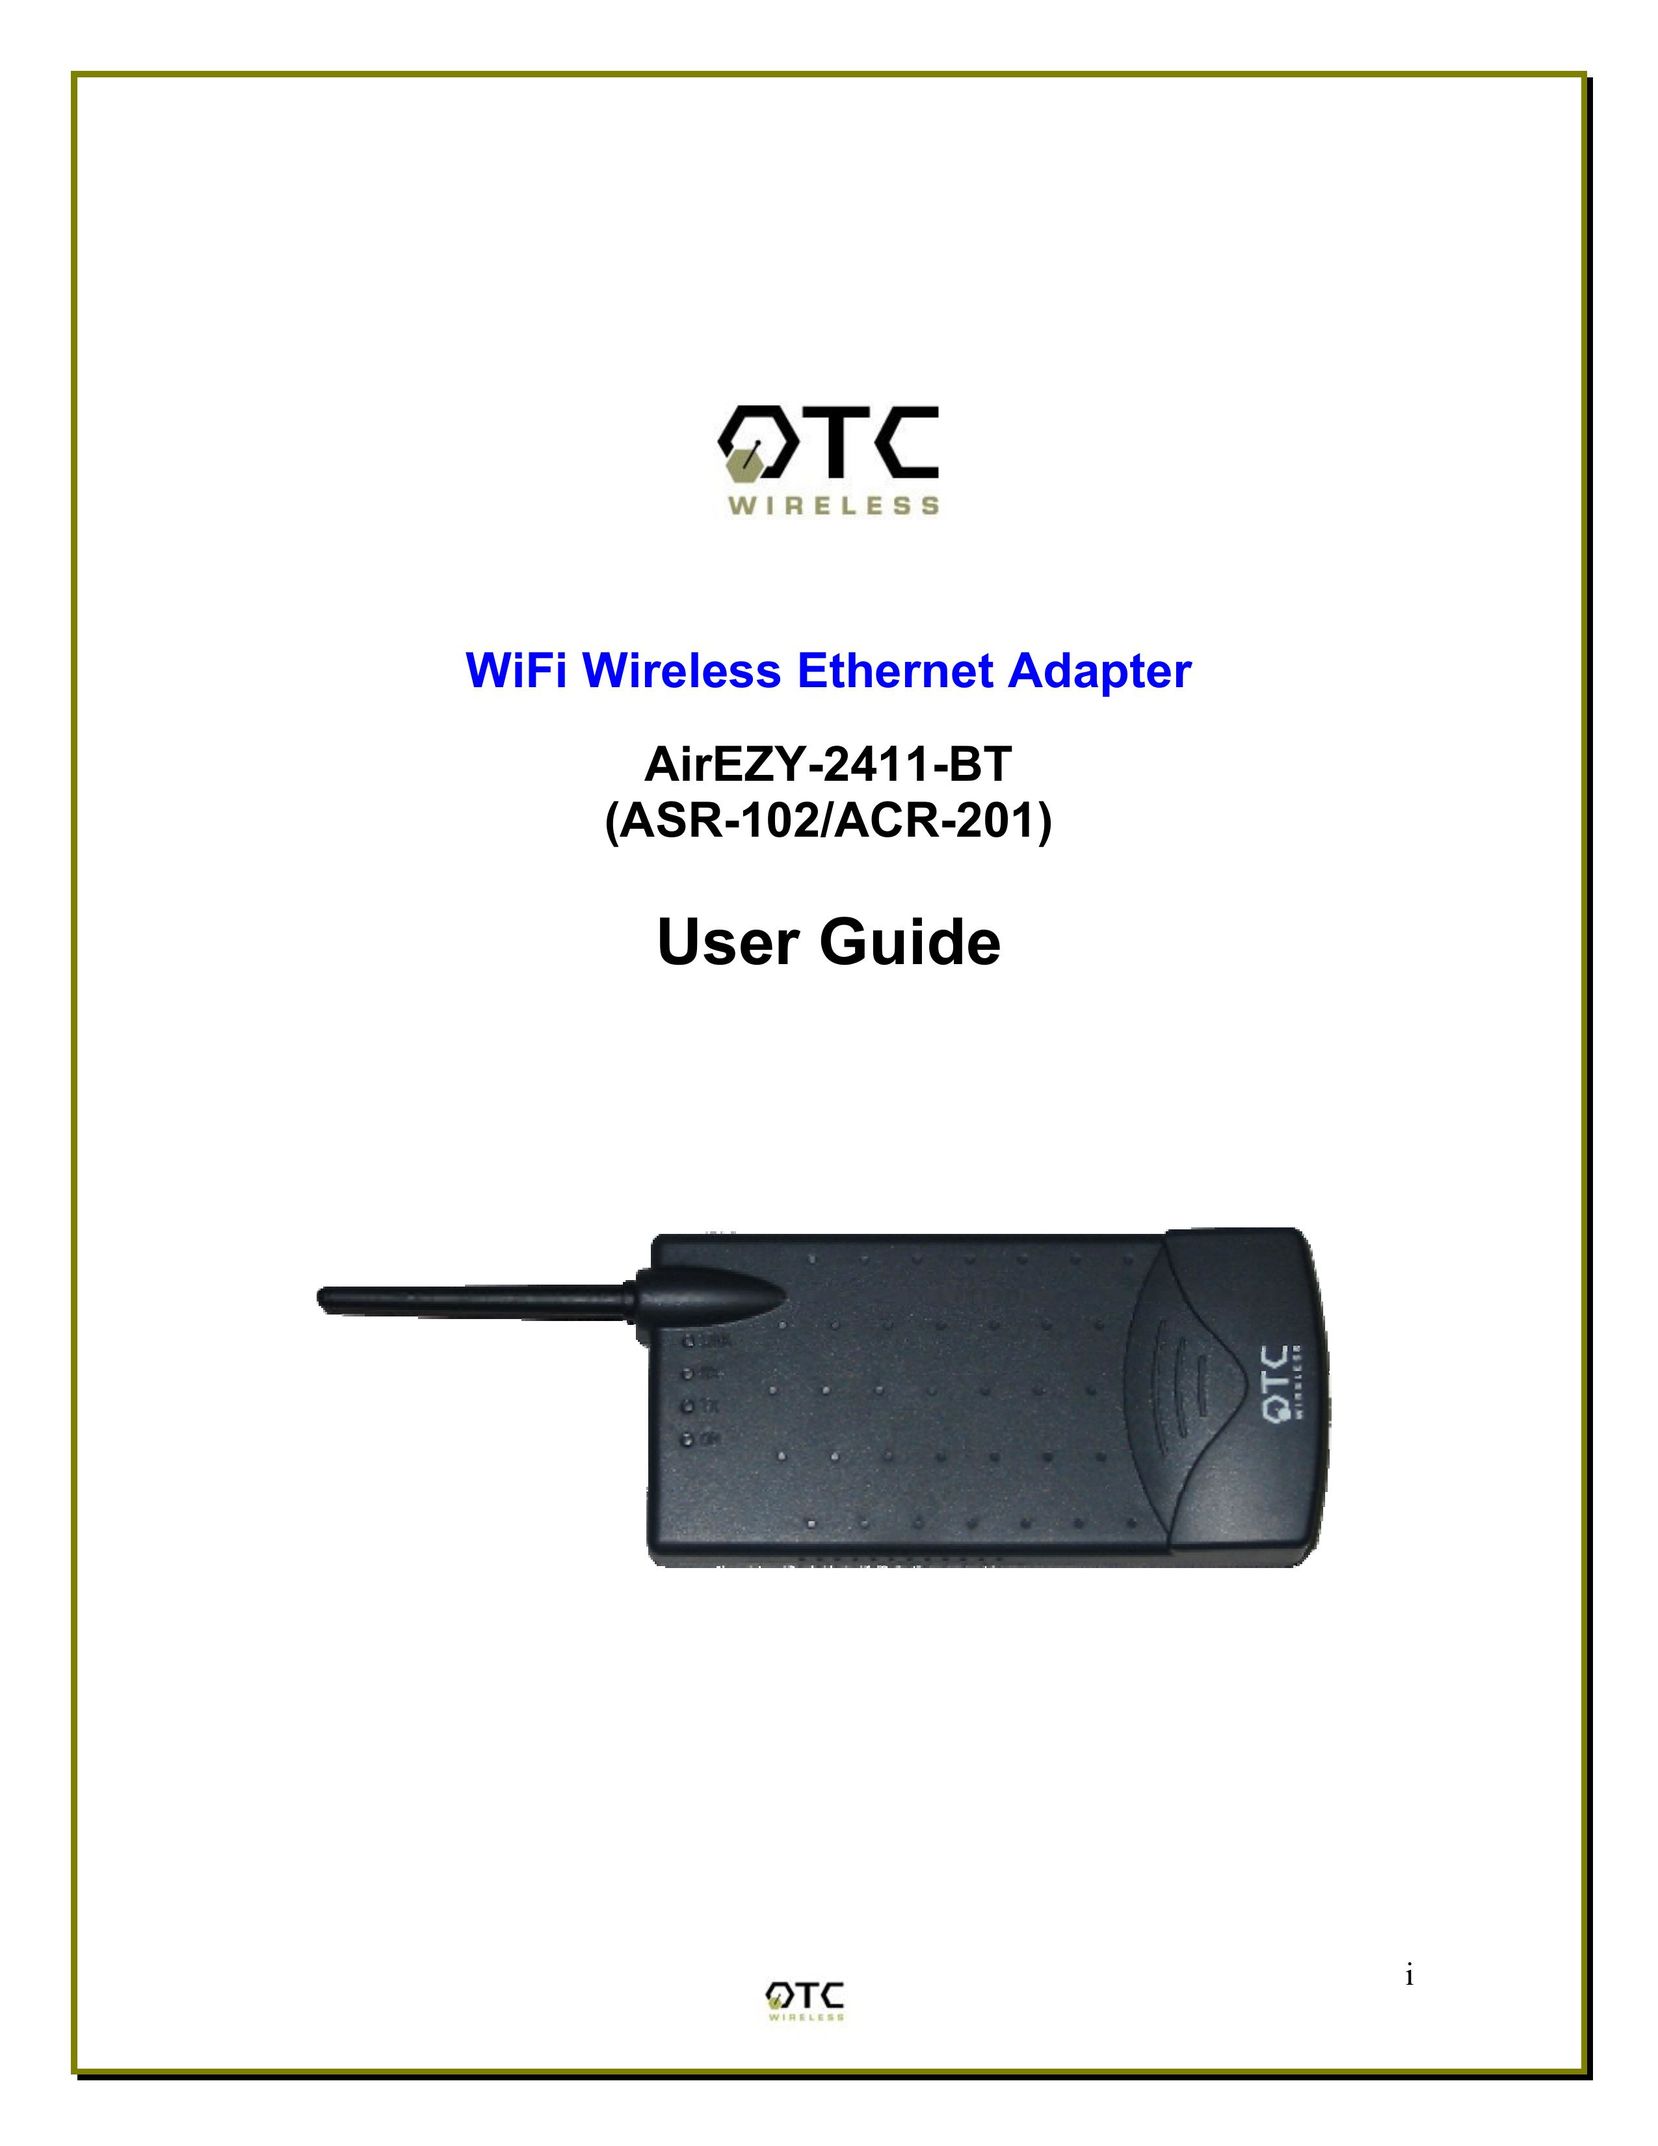 OTC Wireless ACR-201 Network Card User Manual